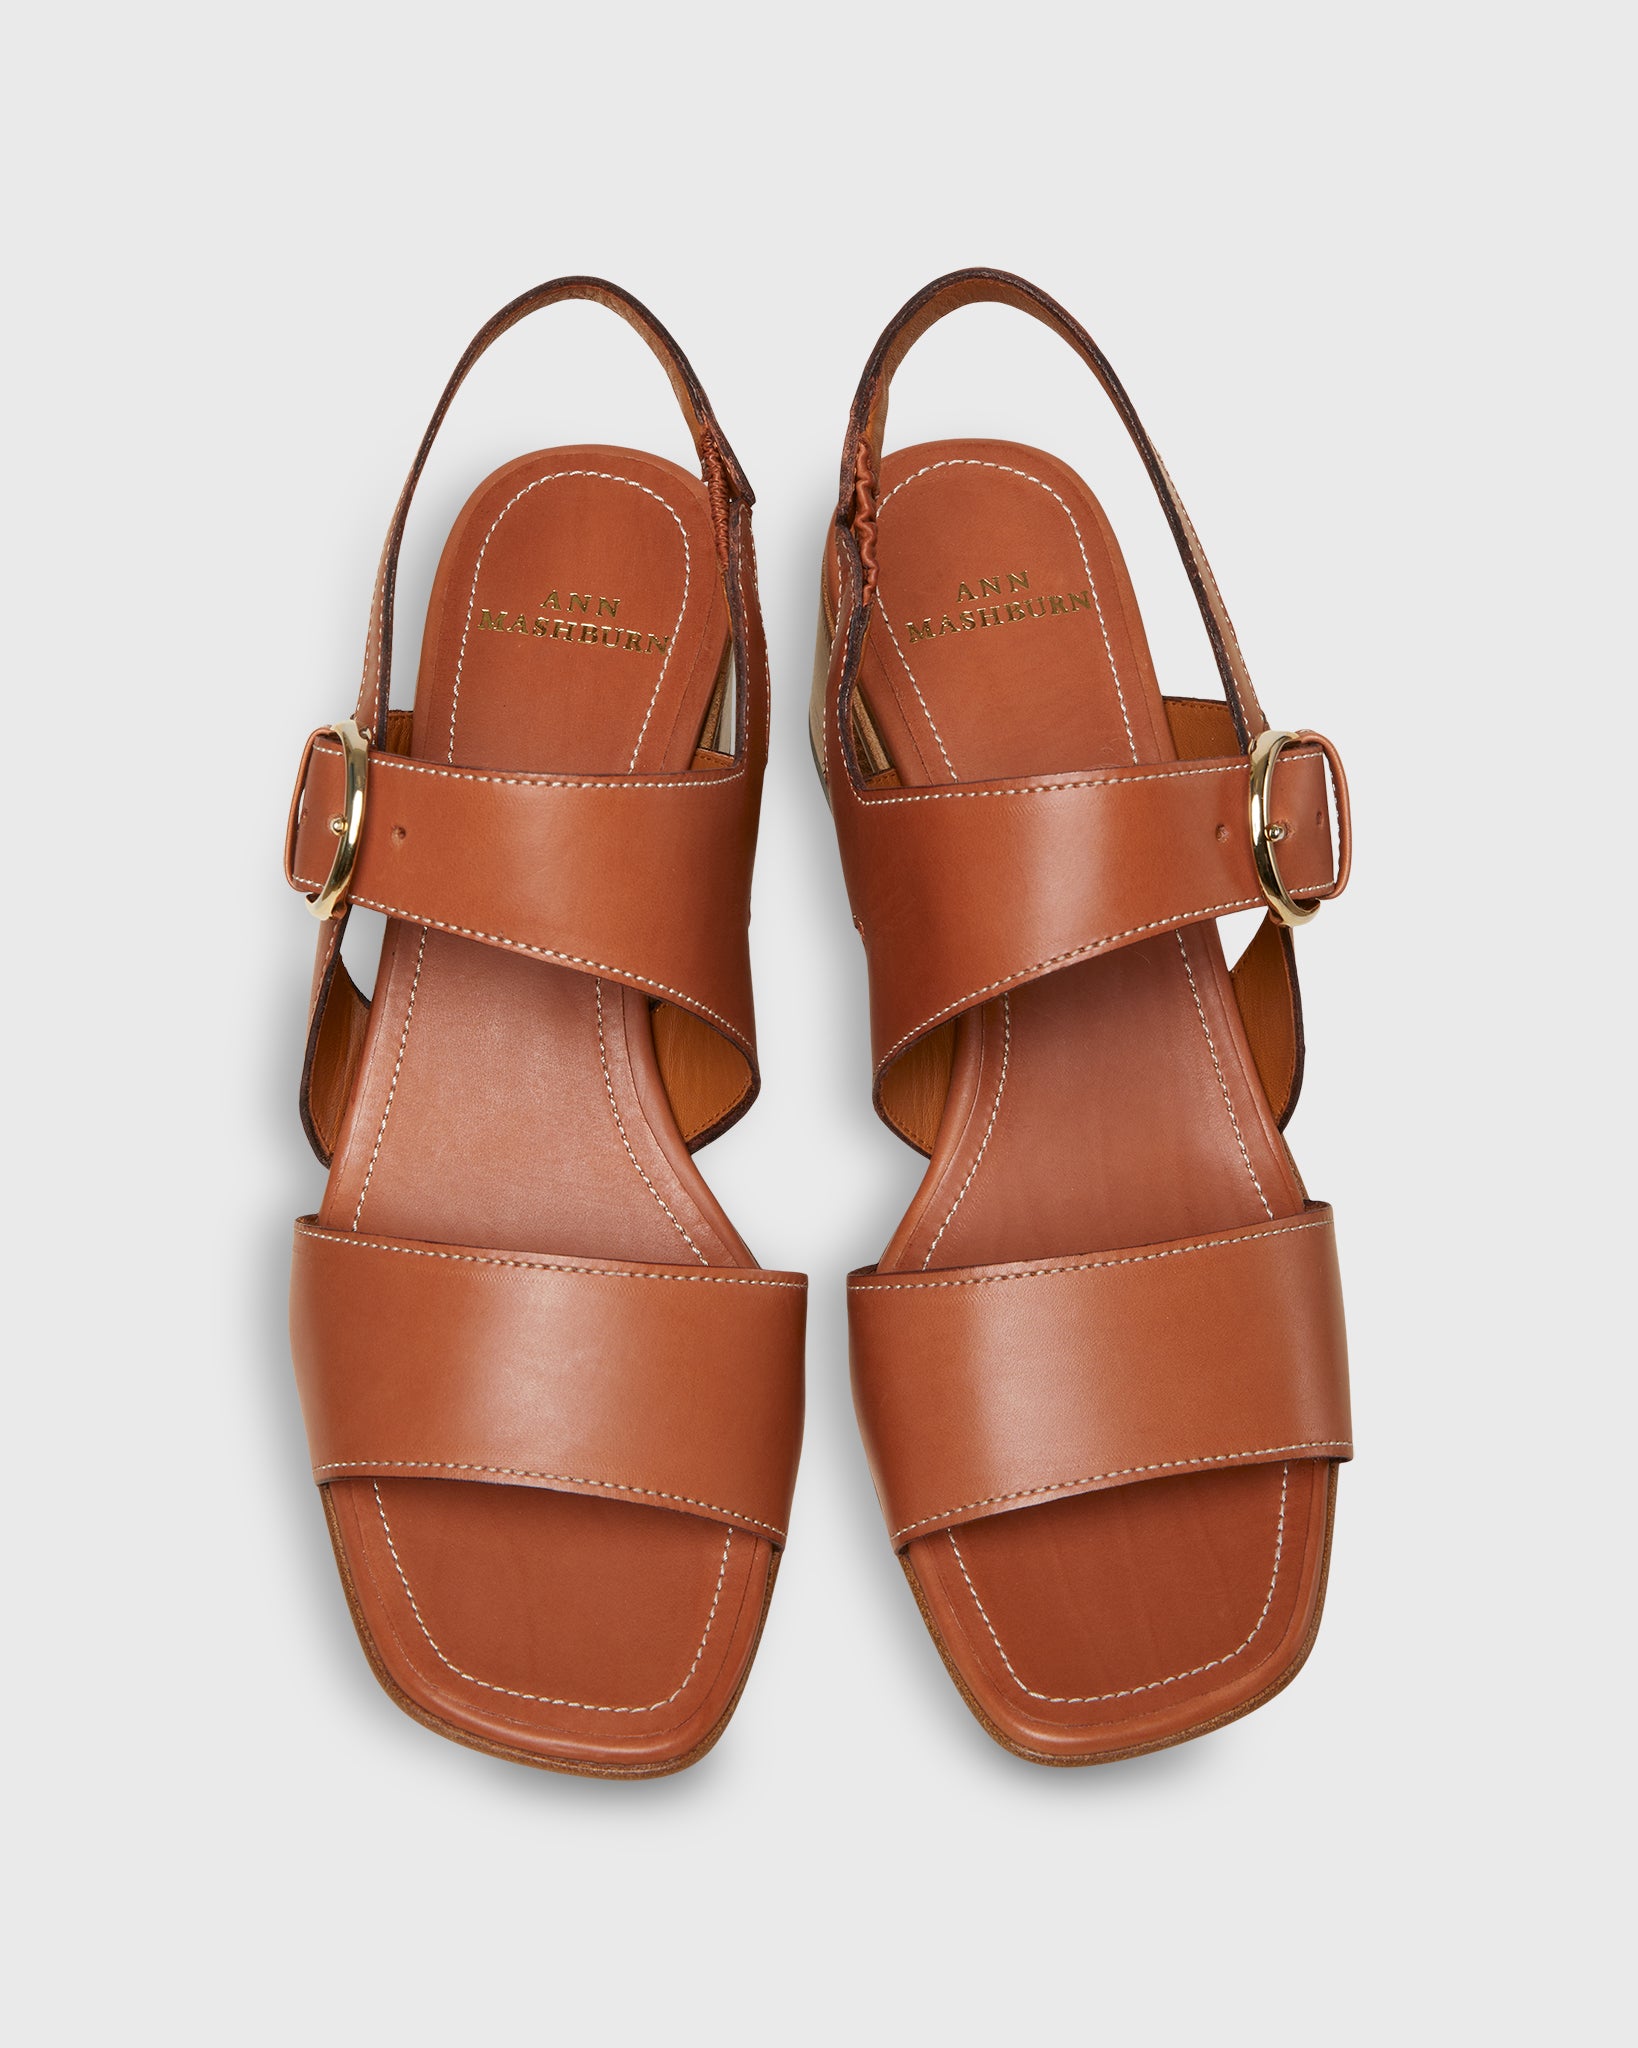 Double-Strap Buckle Block Heel in English Tan Leather